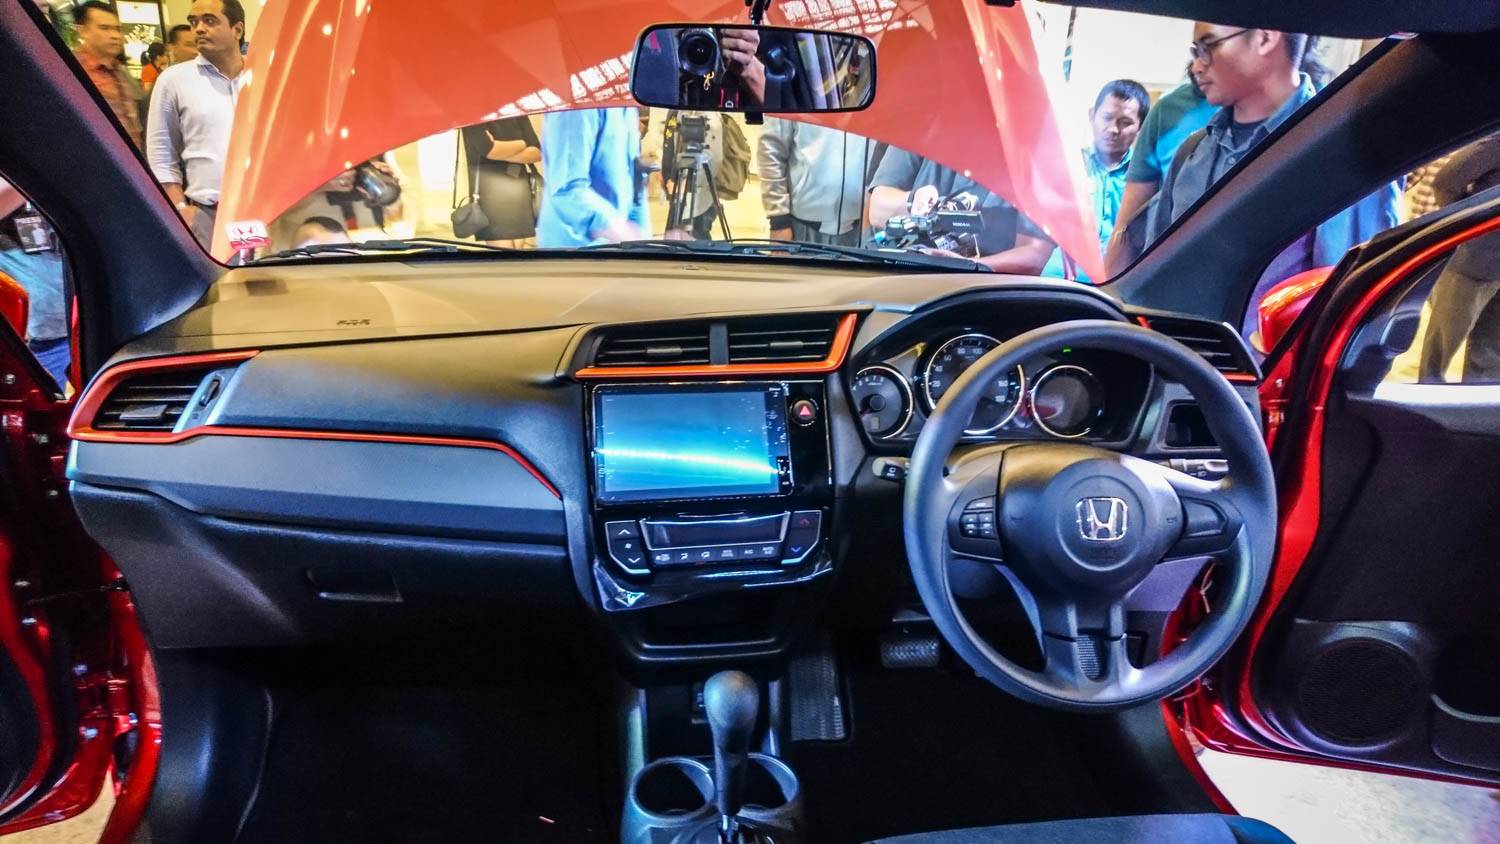 66 Honda Mobilio Modifikasi Interior HD